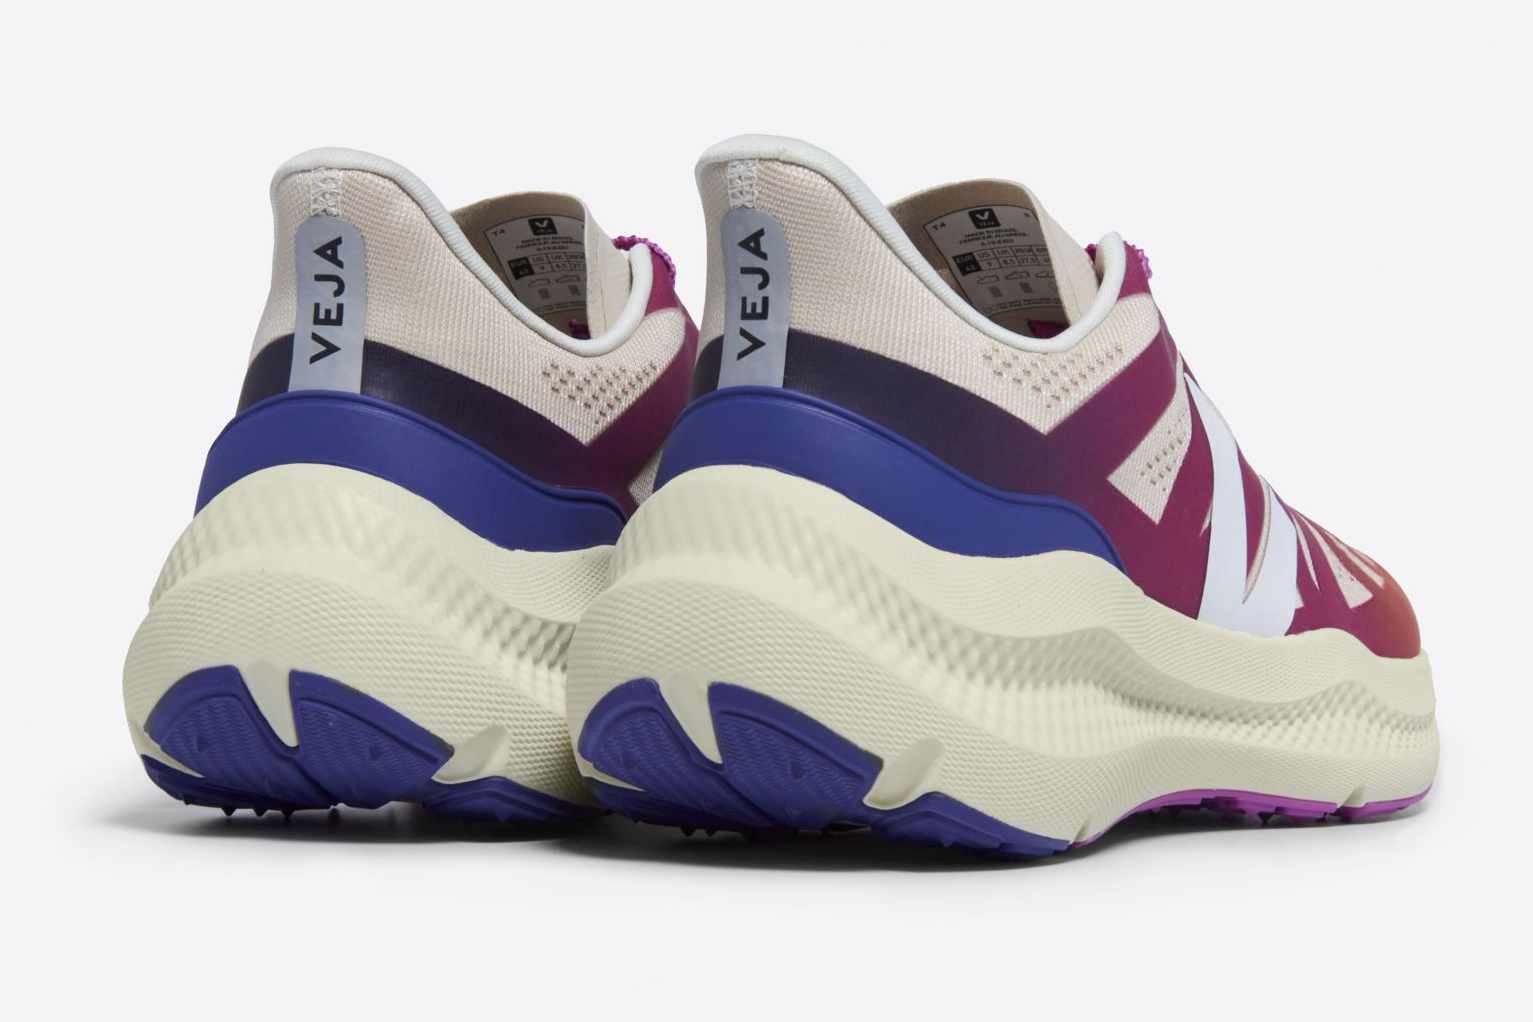 Veja’s New Running Shoe Is a Surprisingly Slick Crossover Sneaker